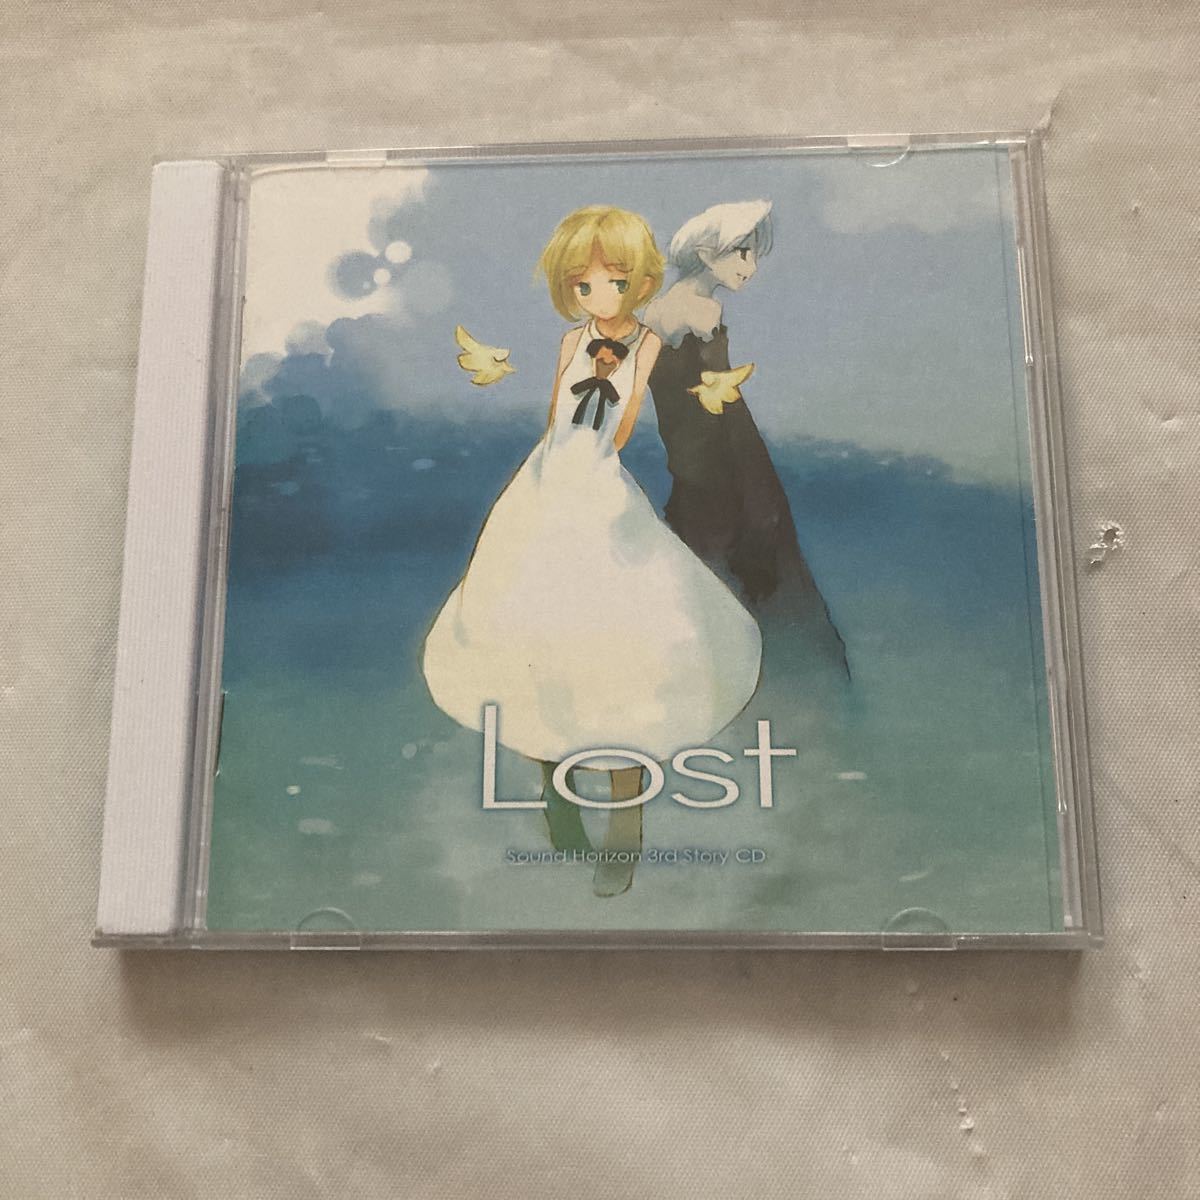 Yahoo!オークション -「lost サンホラ」(CD) の落札相場・落札価格